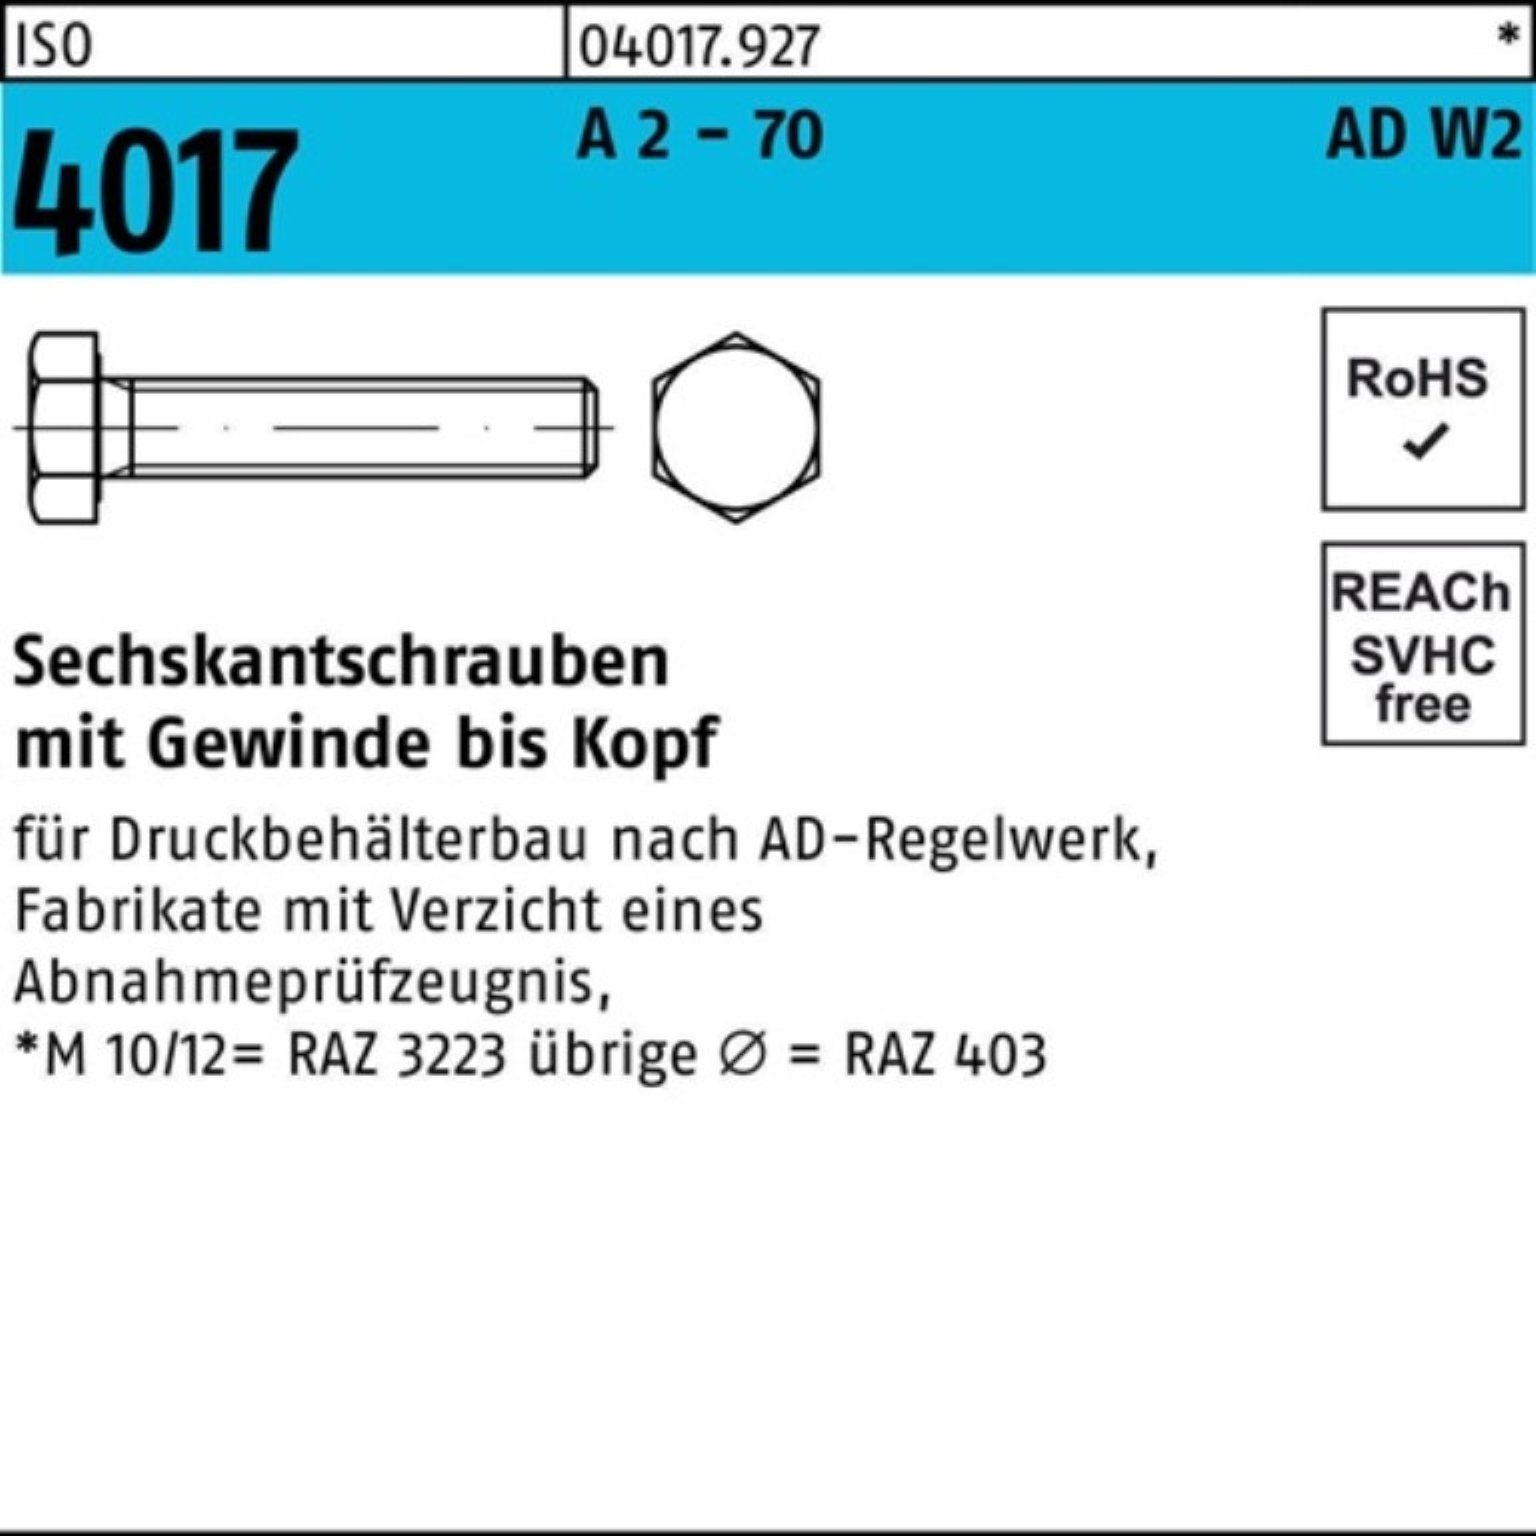 Bufab Sechskantschraube 100er Pack Sechskantschraube ISO 4017 VG M12x 60 A 2 - 70 AD-W2 50 St | Schrauben